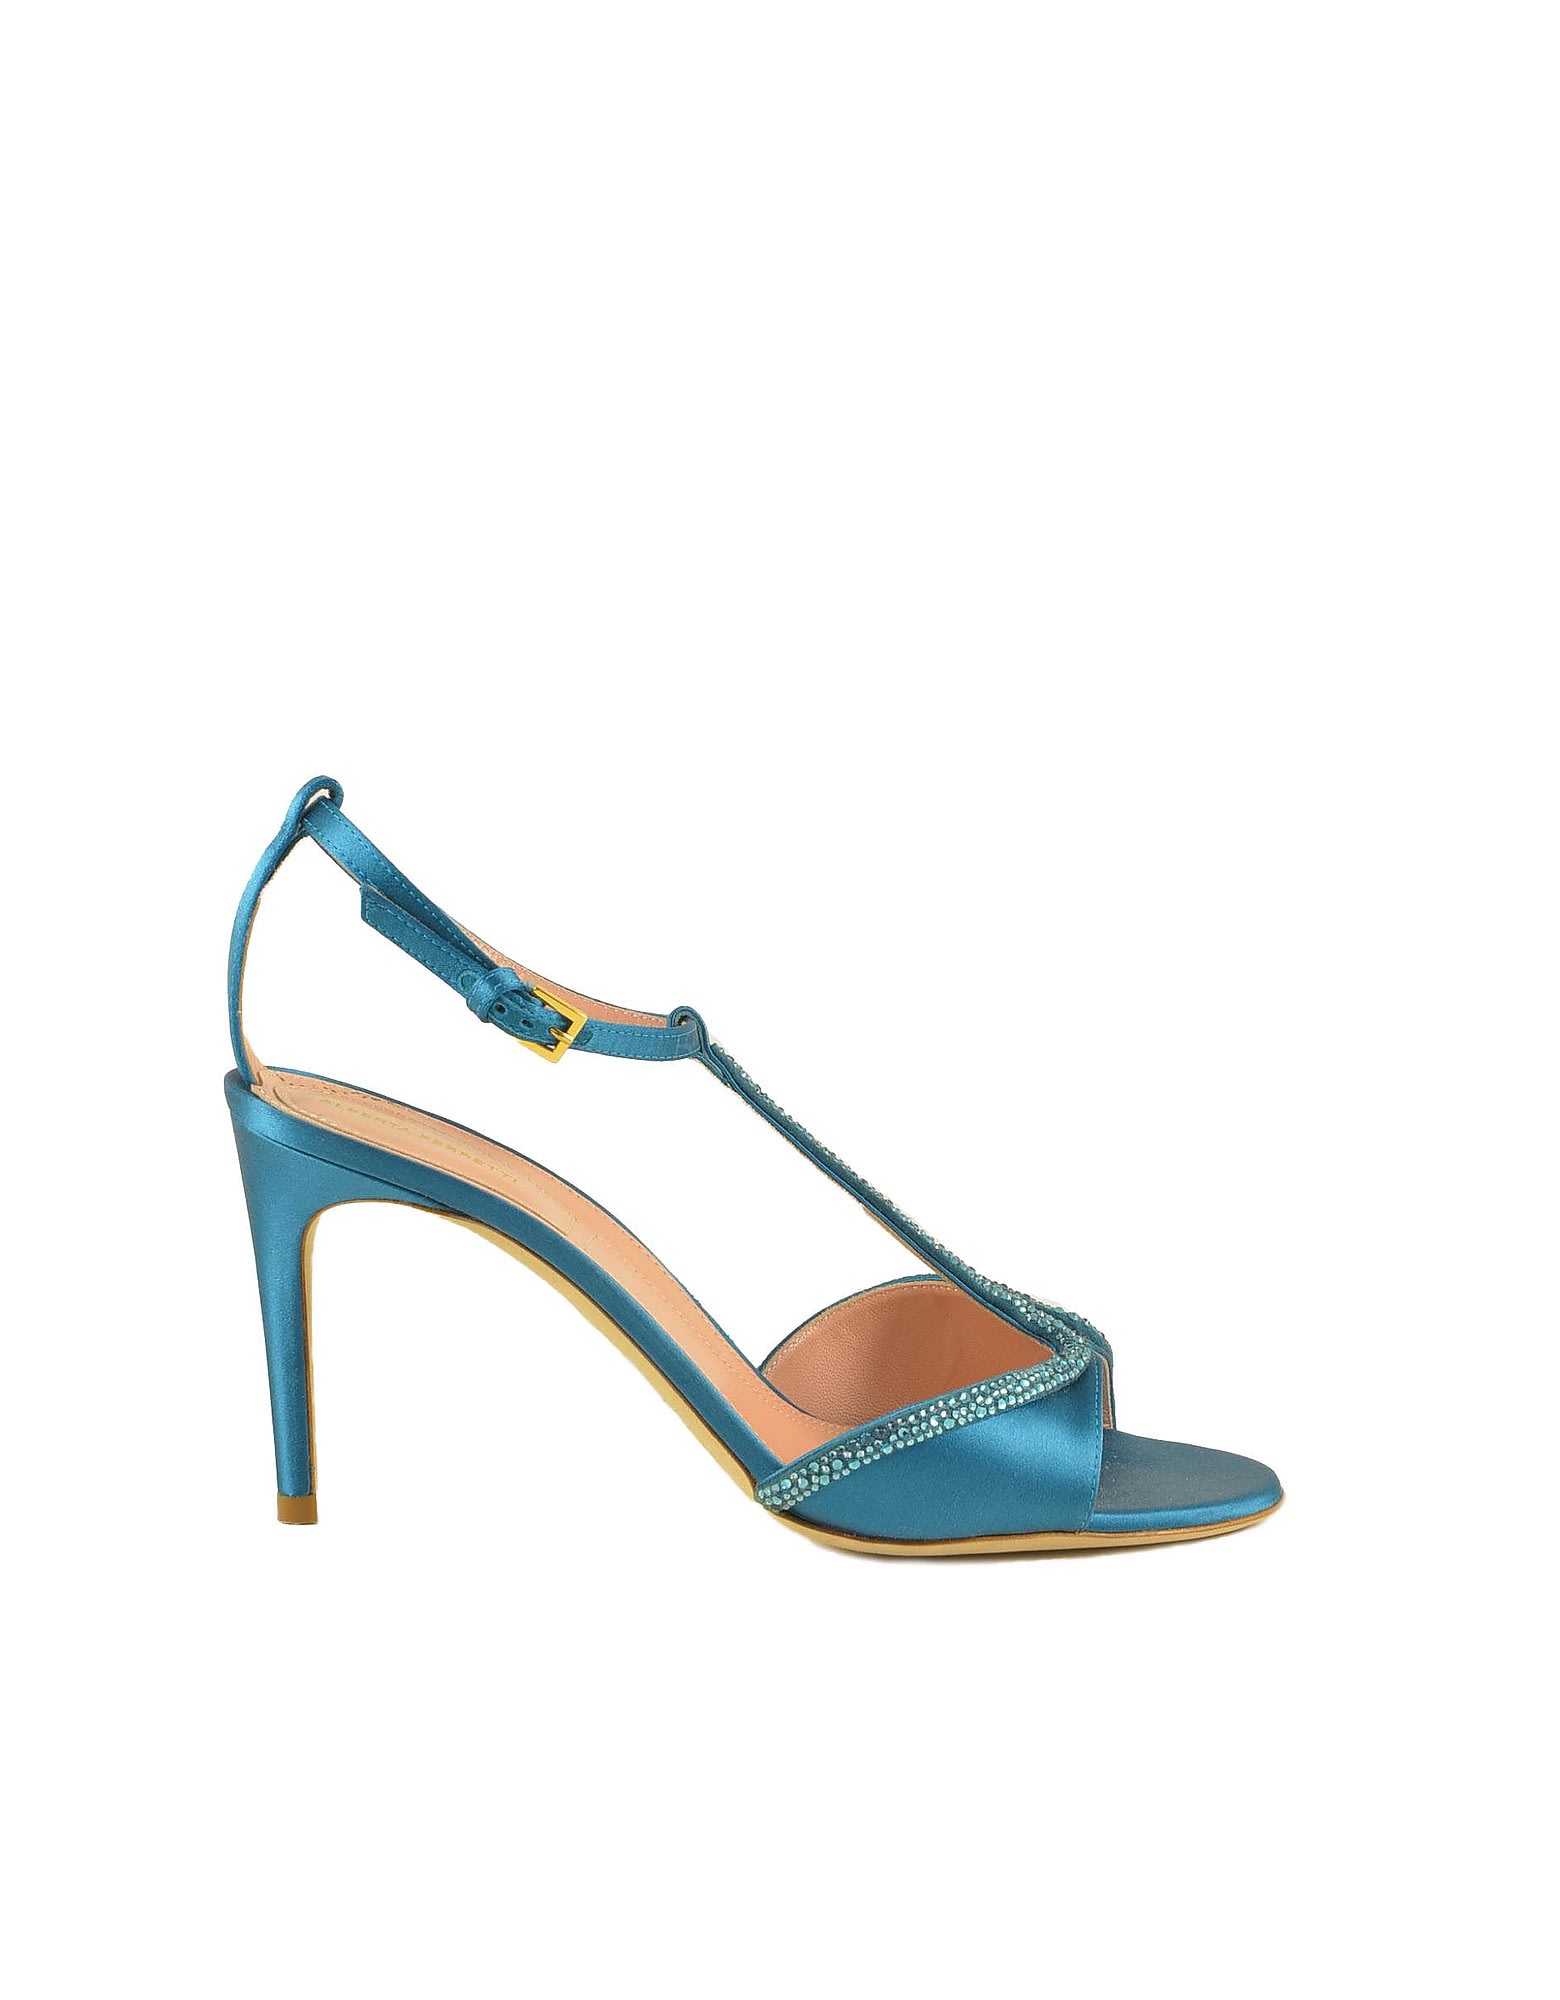 Alberta Ferretti Womens Turquoise Sandals